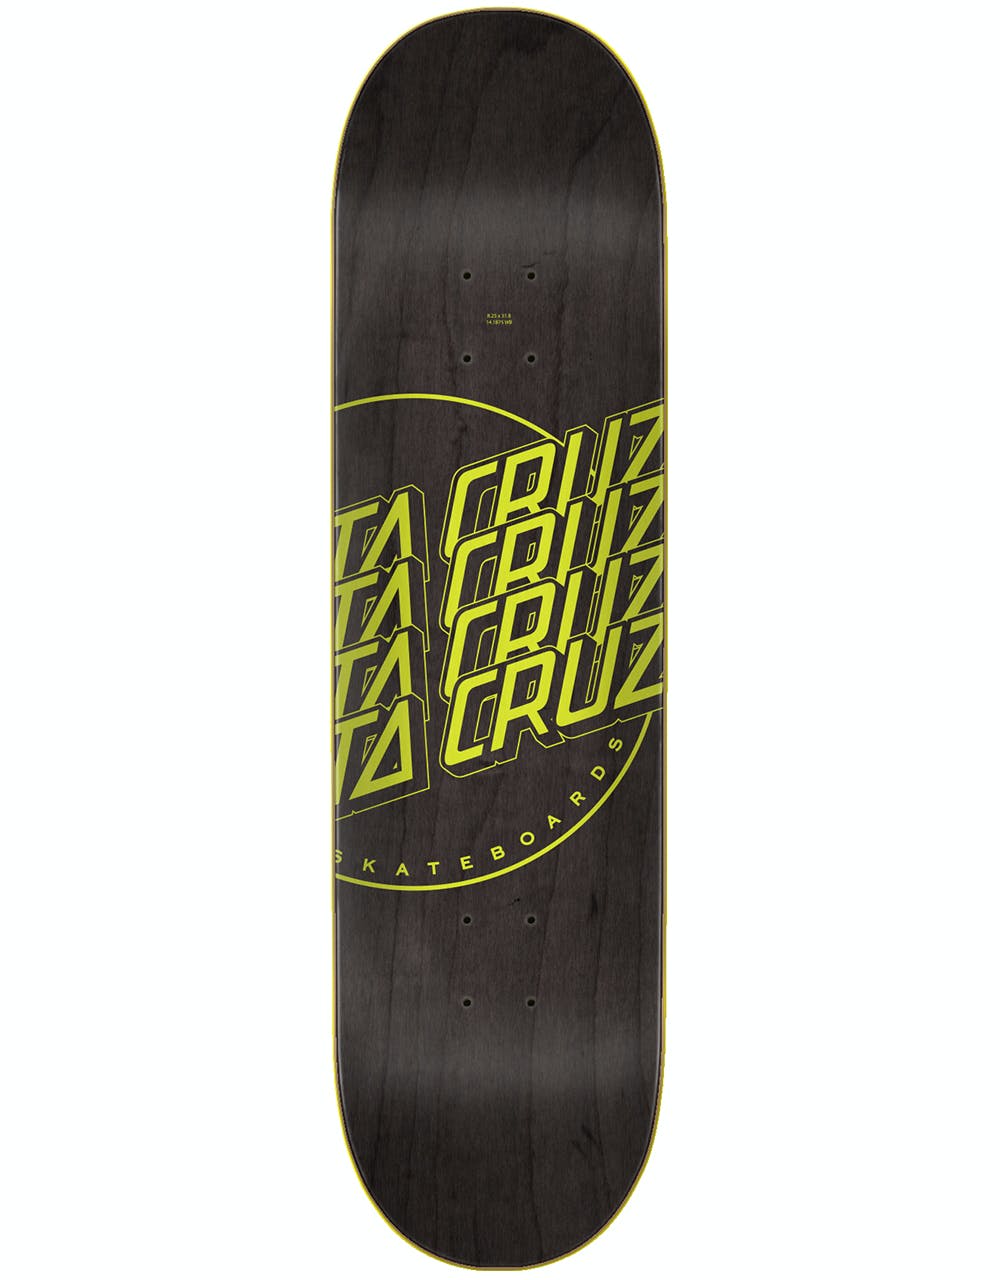 Santa Cruz Multistrip HRM Skateboard Deck - 8.25"